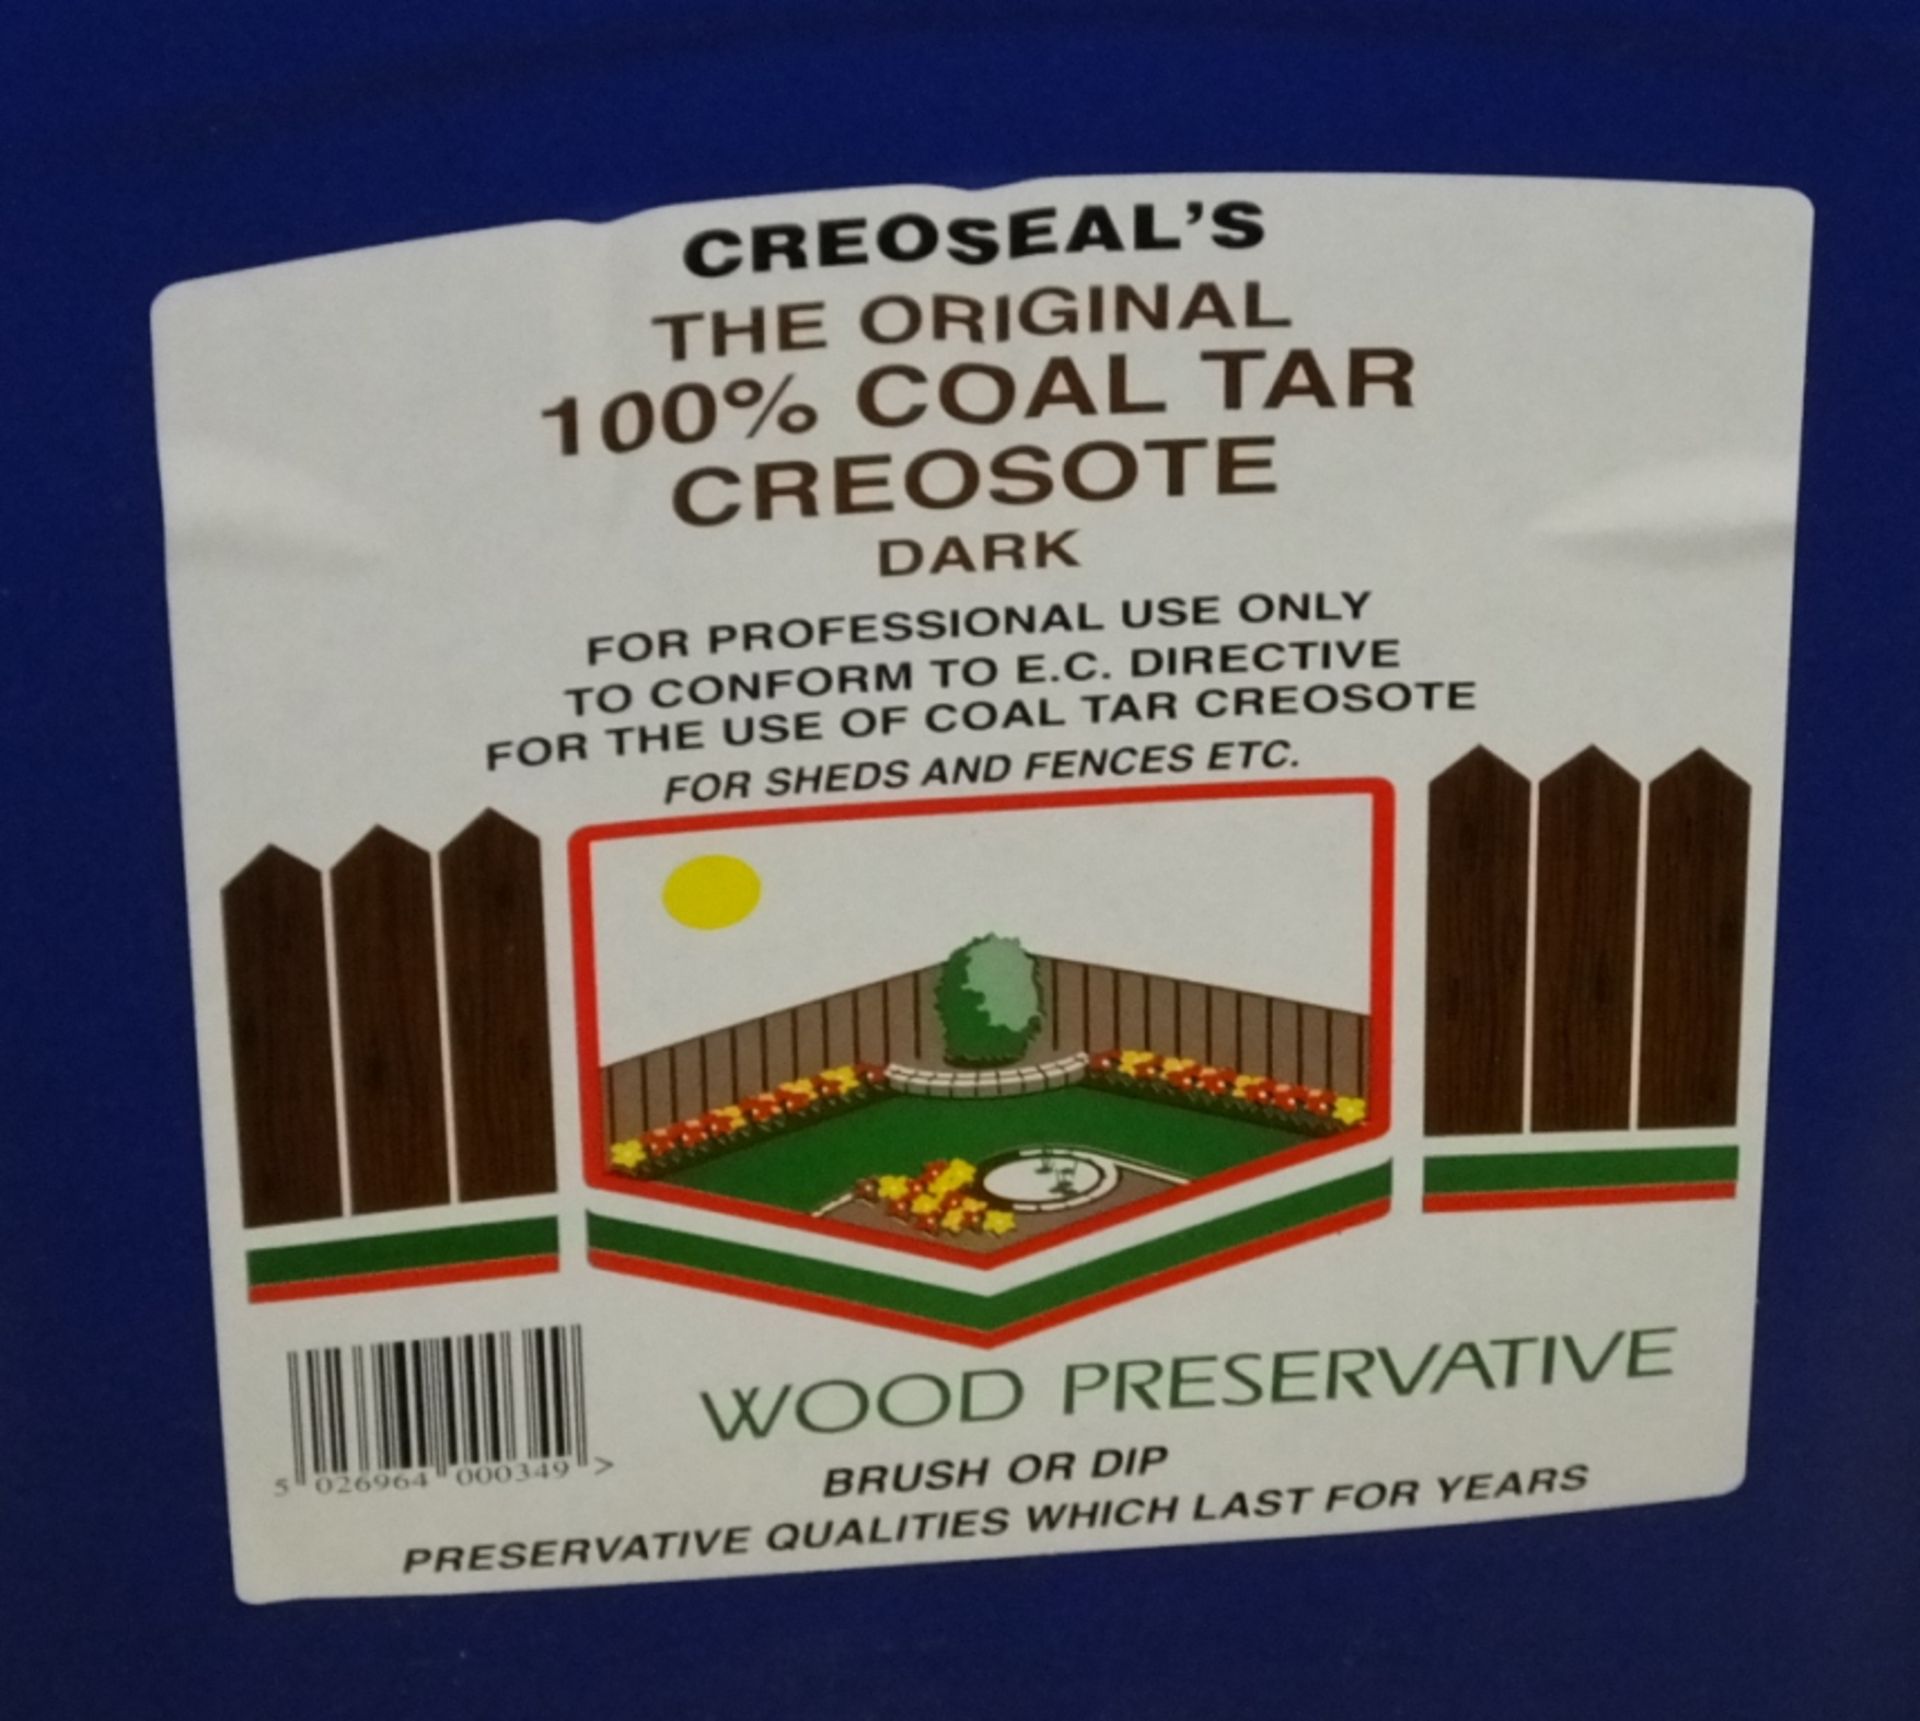 3x Creoseals 100% Coal tar Creosote dark - 20ltr tubs - Image 3 of 3